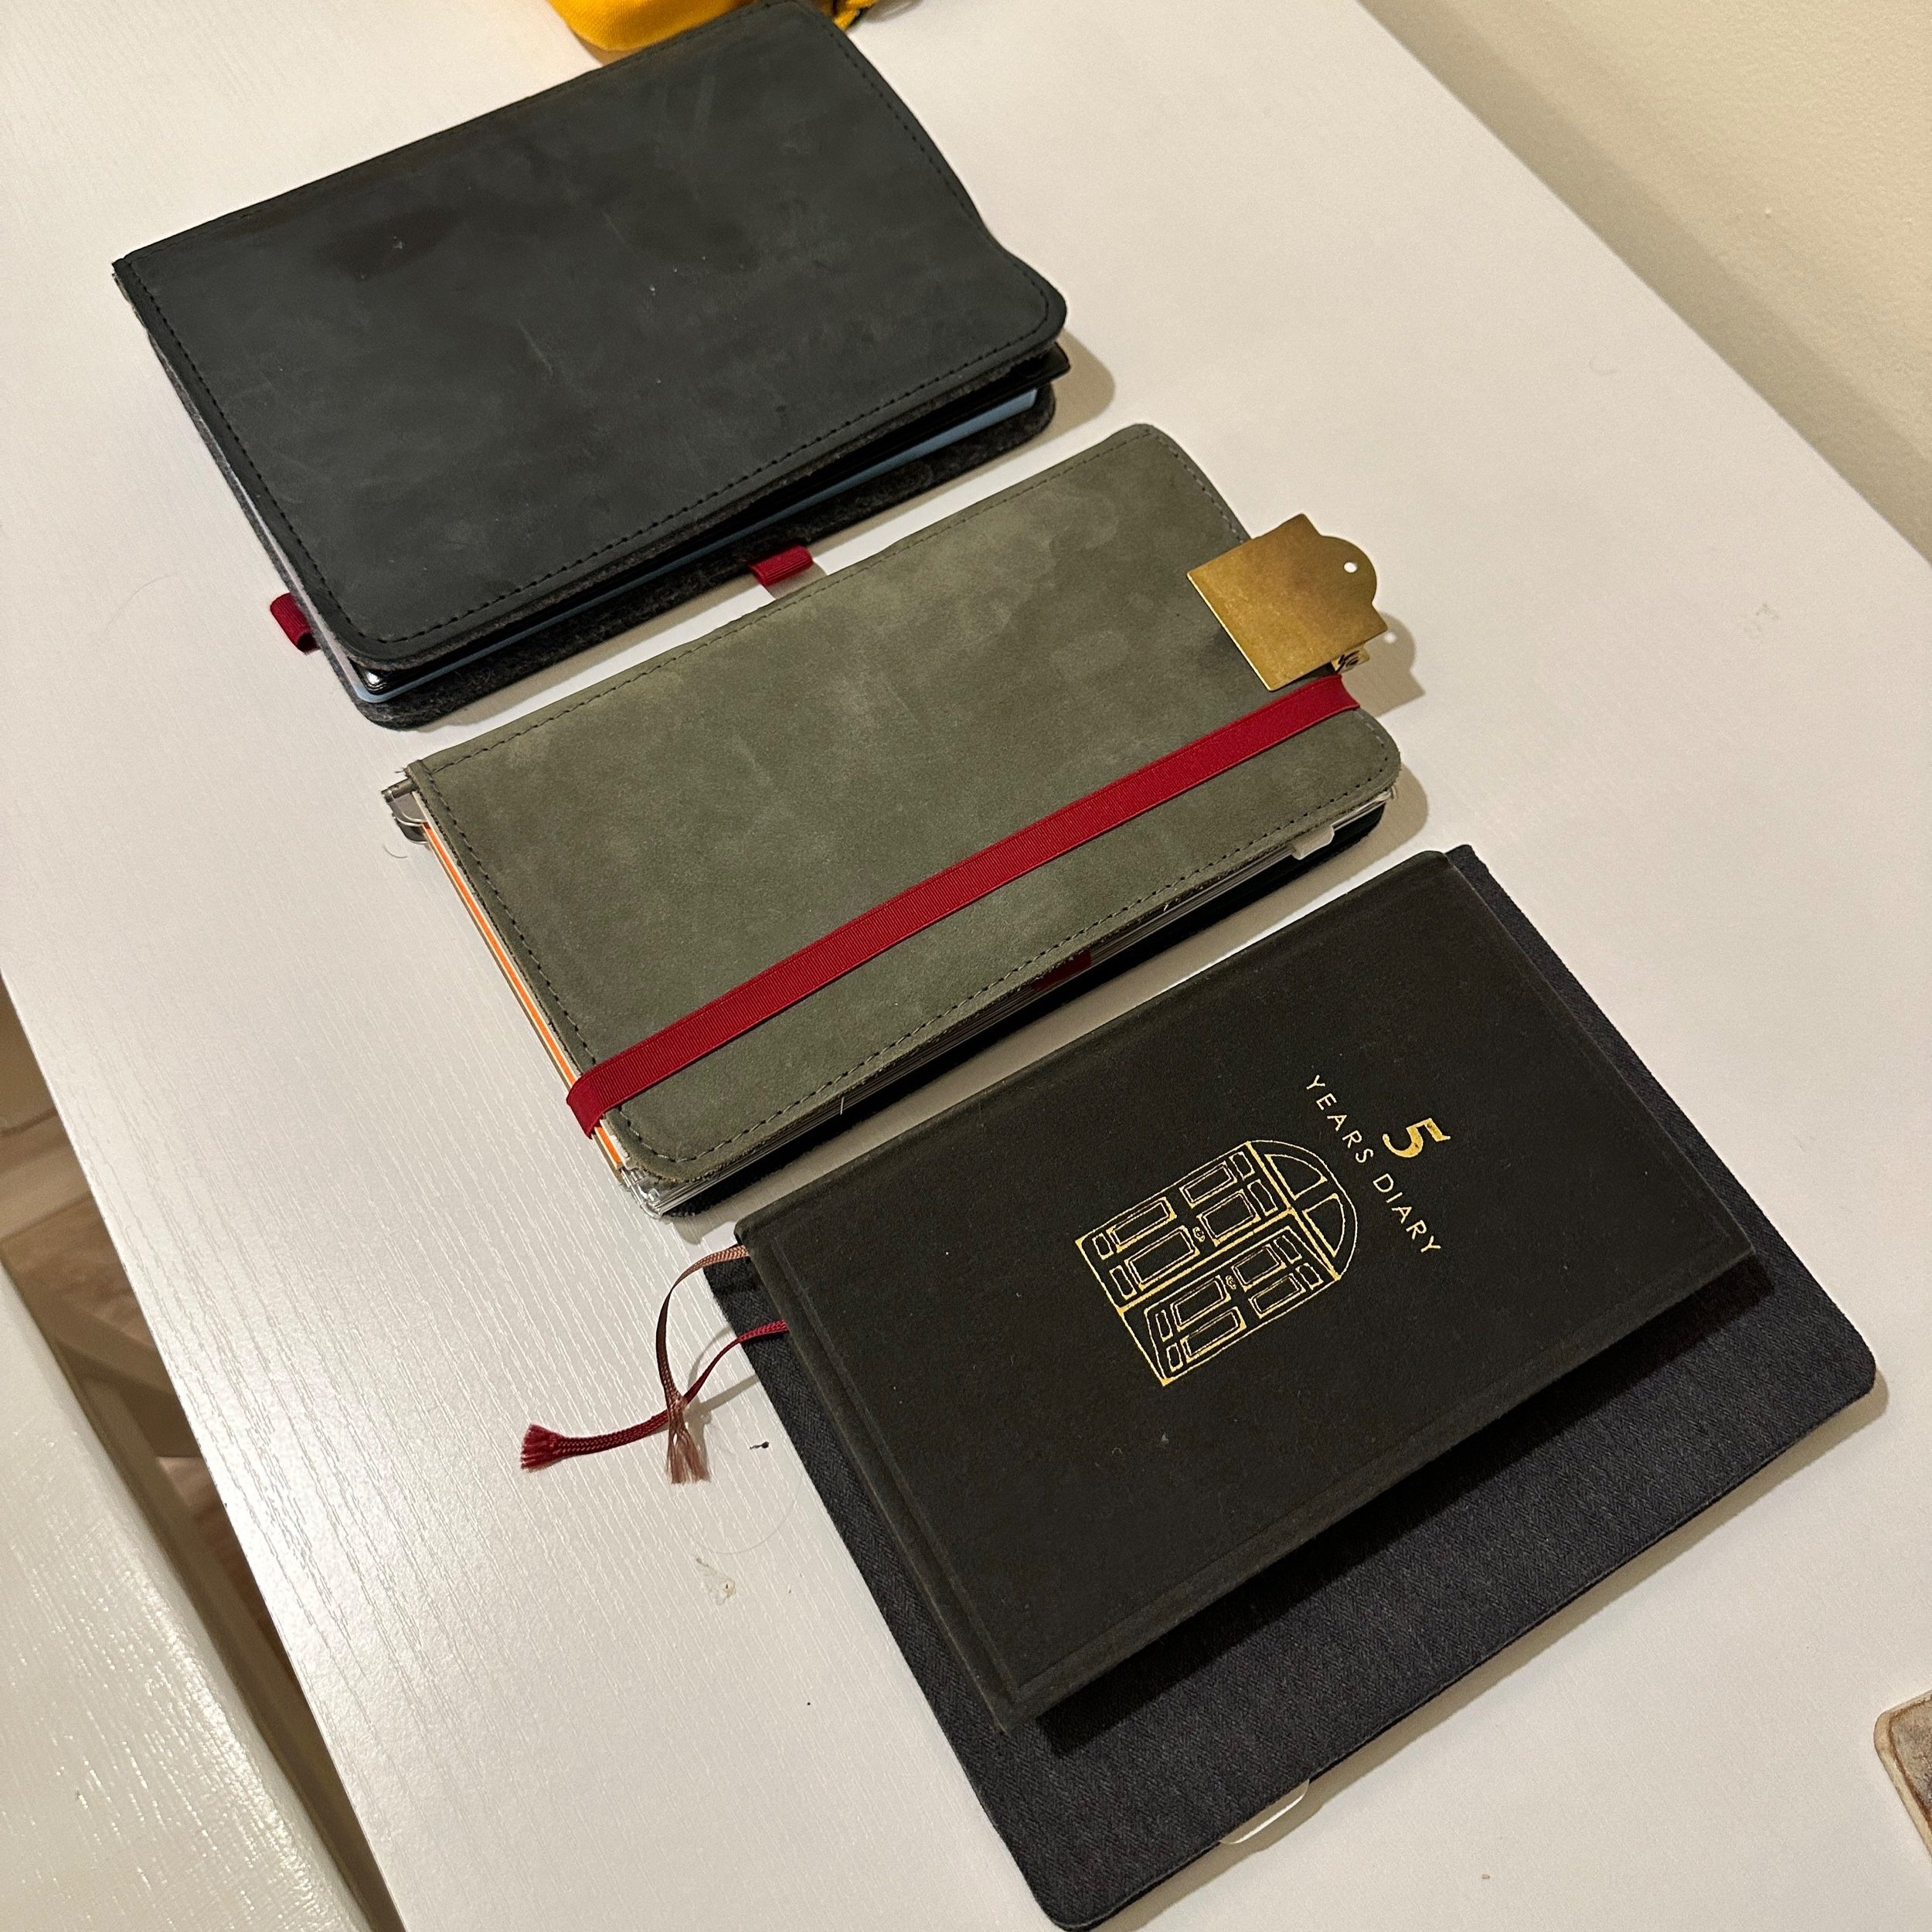 Moleskine Celebrates Creative Process with New Line of Luxury Notebooks